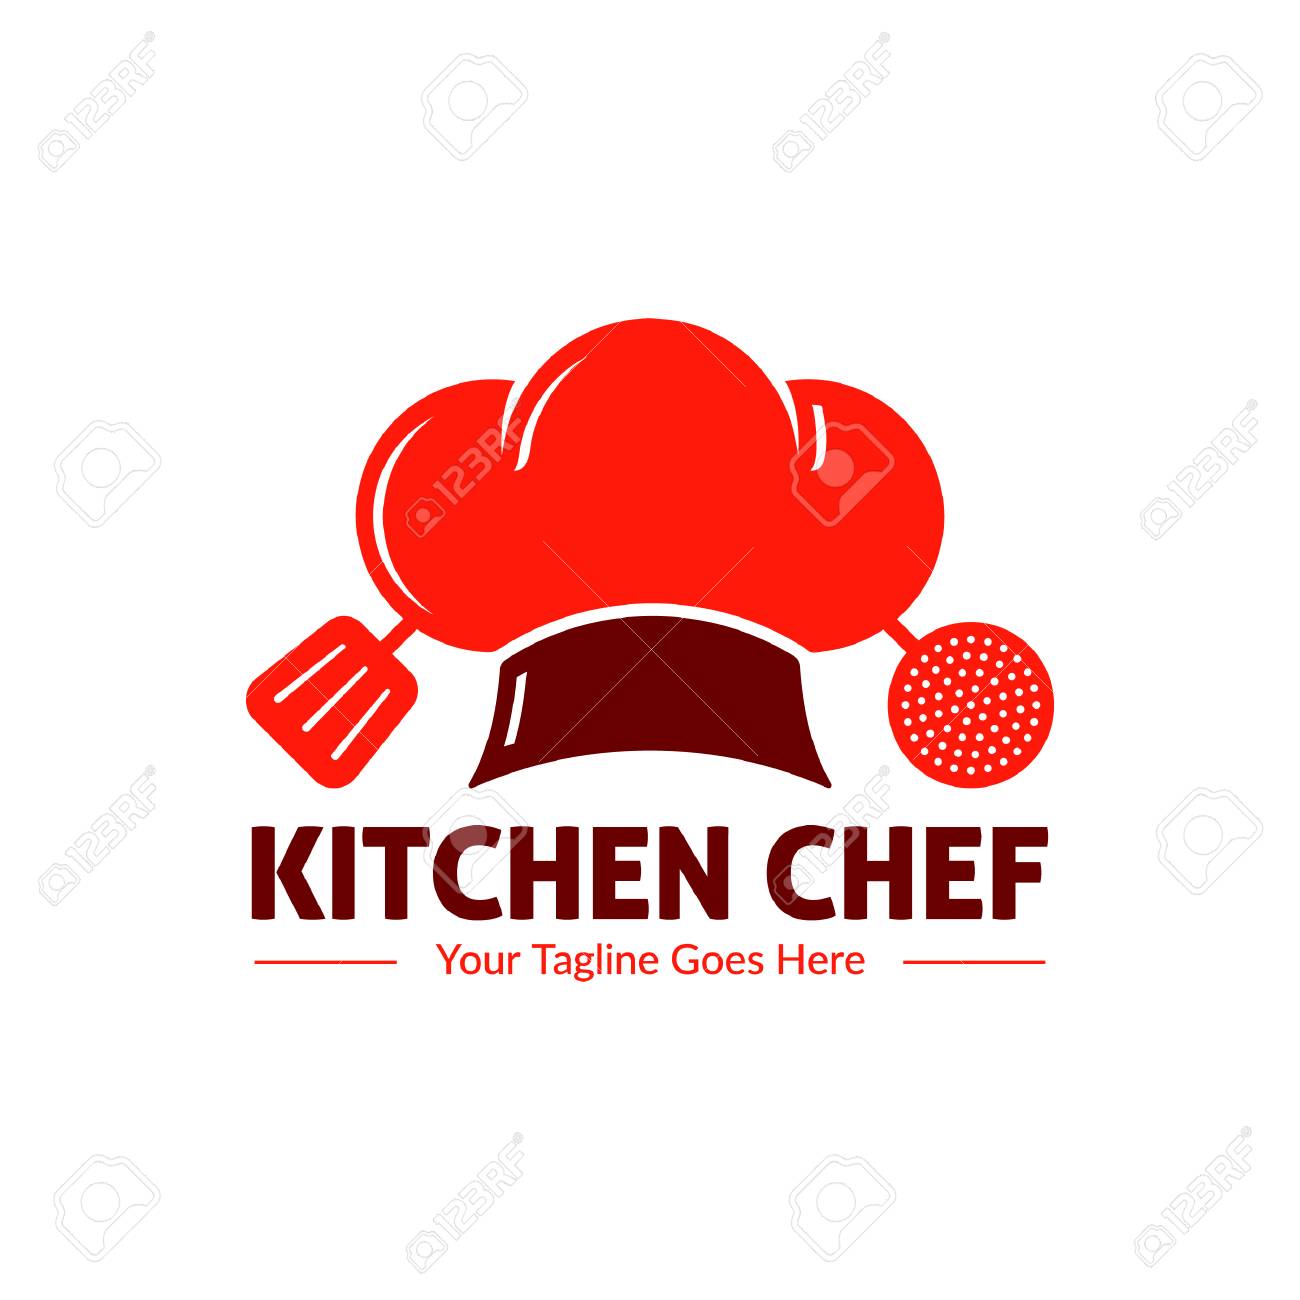 Kinchen chef logo